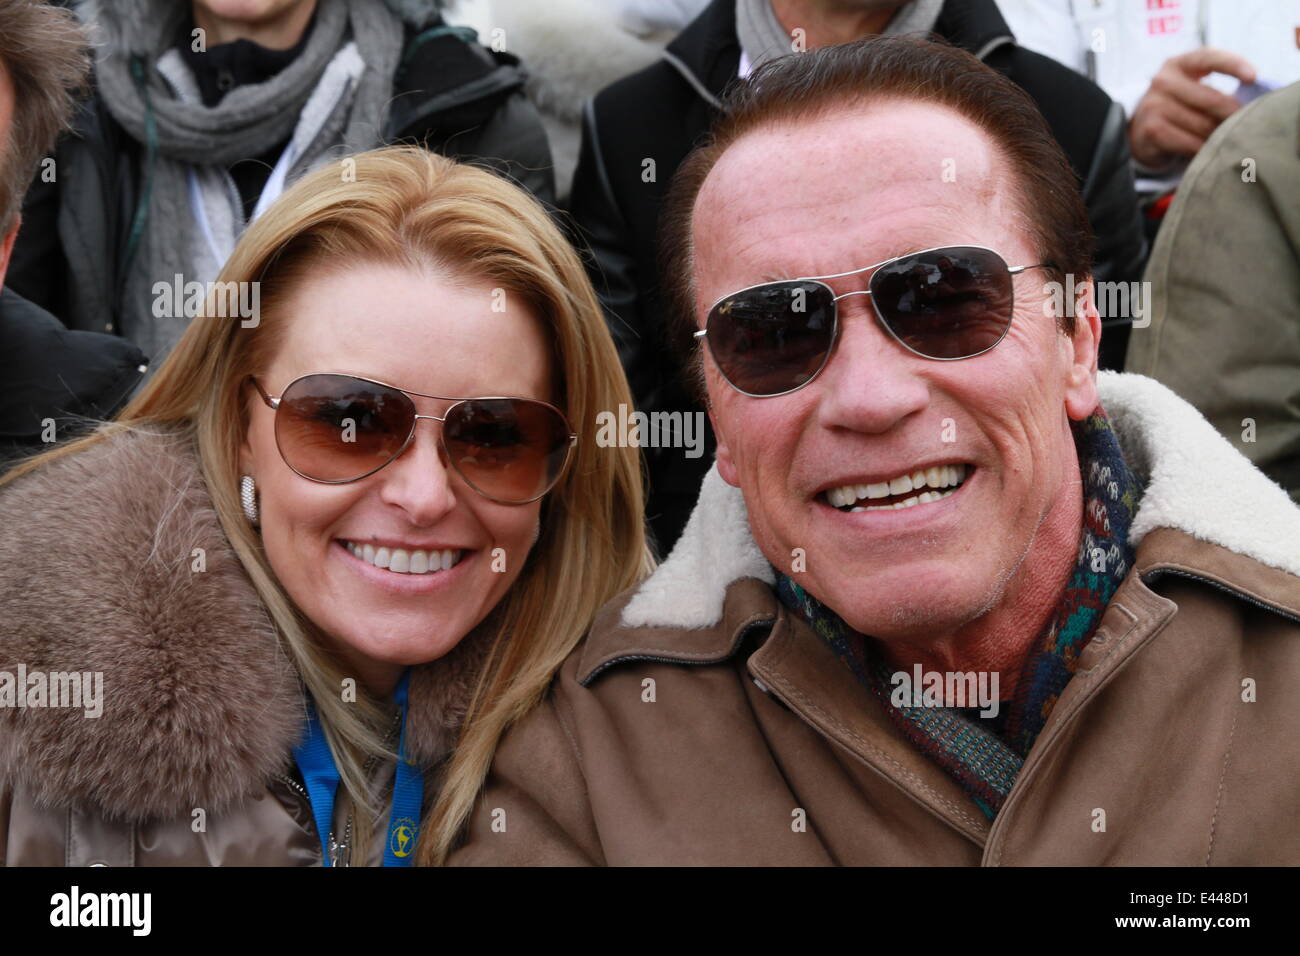 Arnold Schwarzenegger and girlfriend Heather Milligan sitting in the VIP grandstand at the 2014 FIS Alpine World Cup  Featuring: Arnold Schwarzenegger,Heather Milligan Where: Kitzbuehel, Austria When: 25 Jan 2014 Stock Photo